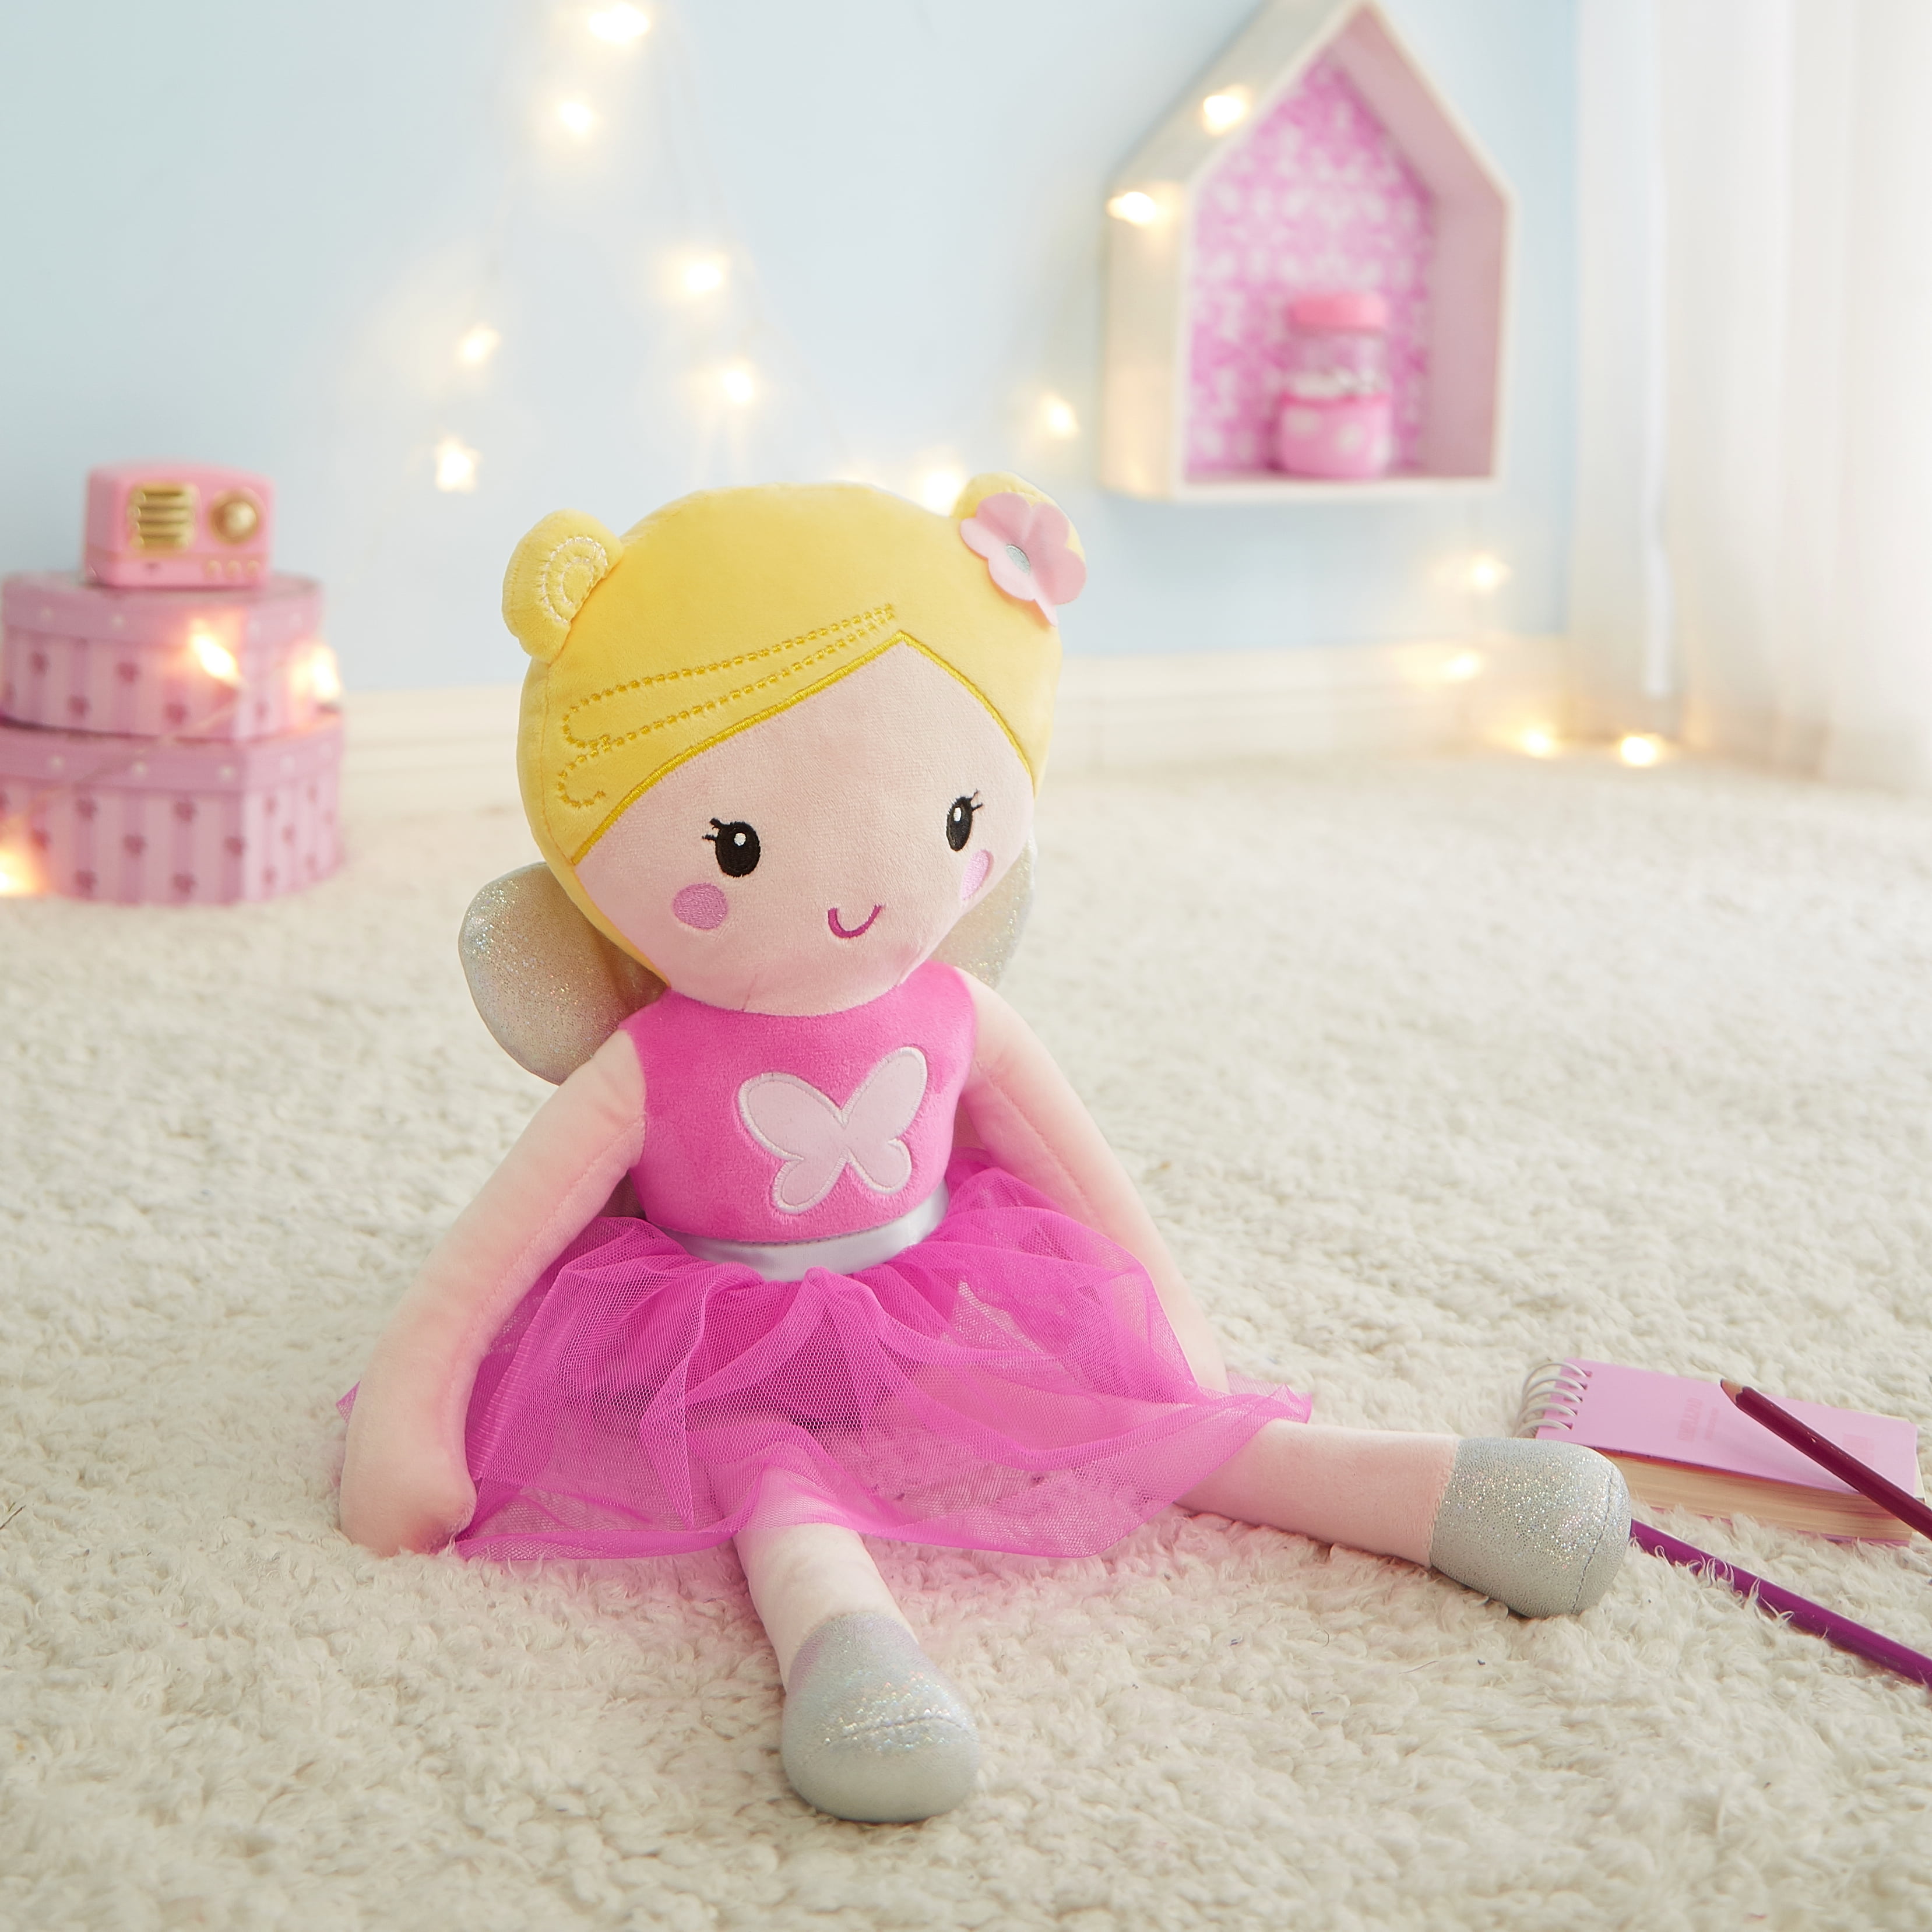 Girls Soft Plush Cloth Fairy Doll Stuffed Toy with Pink Dress 